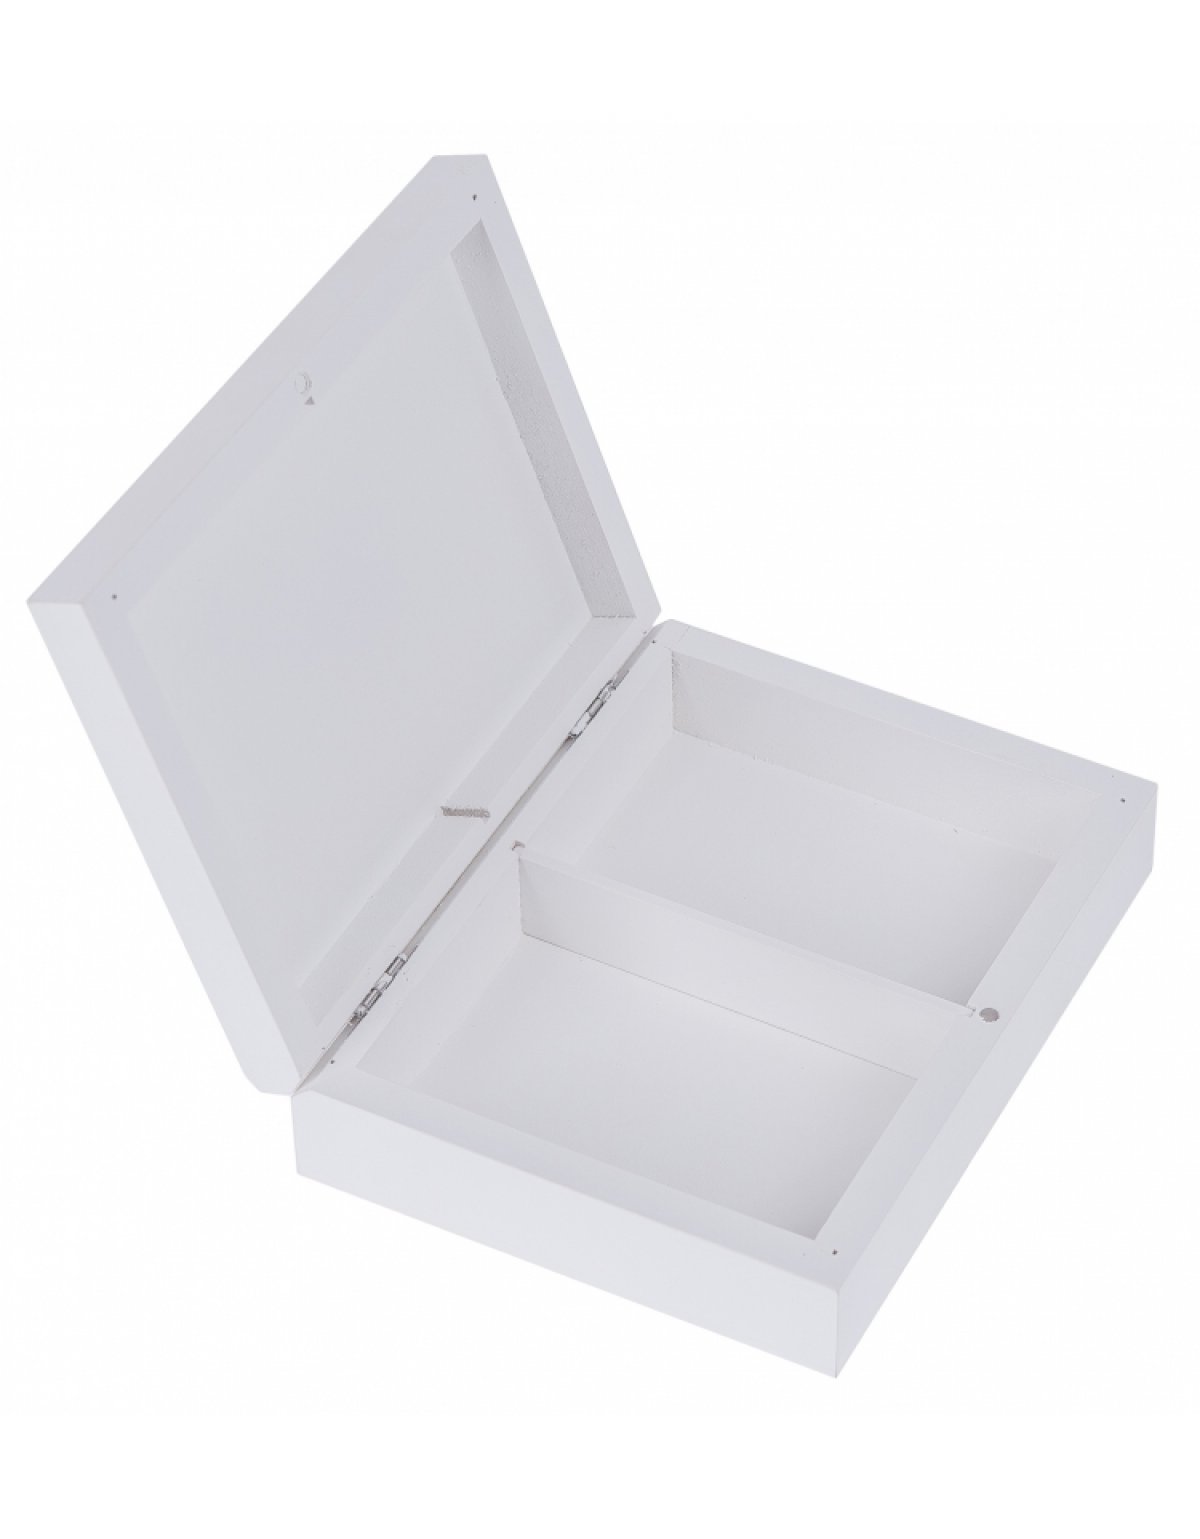 Krabika devn 16x12,5x4 cm na magnet - bl - 2